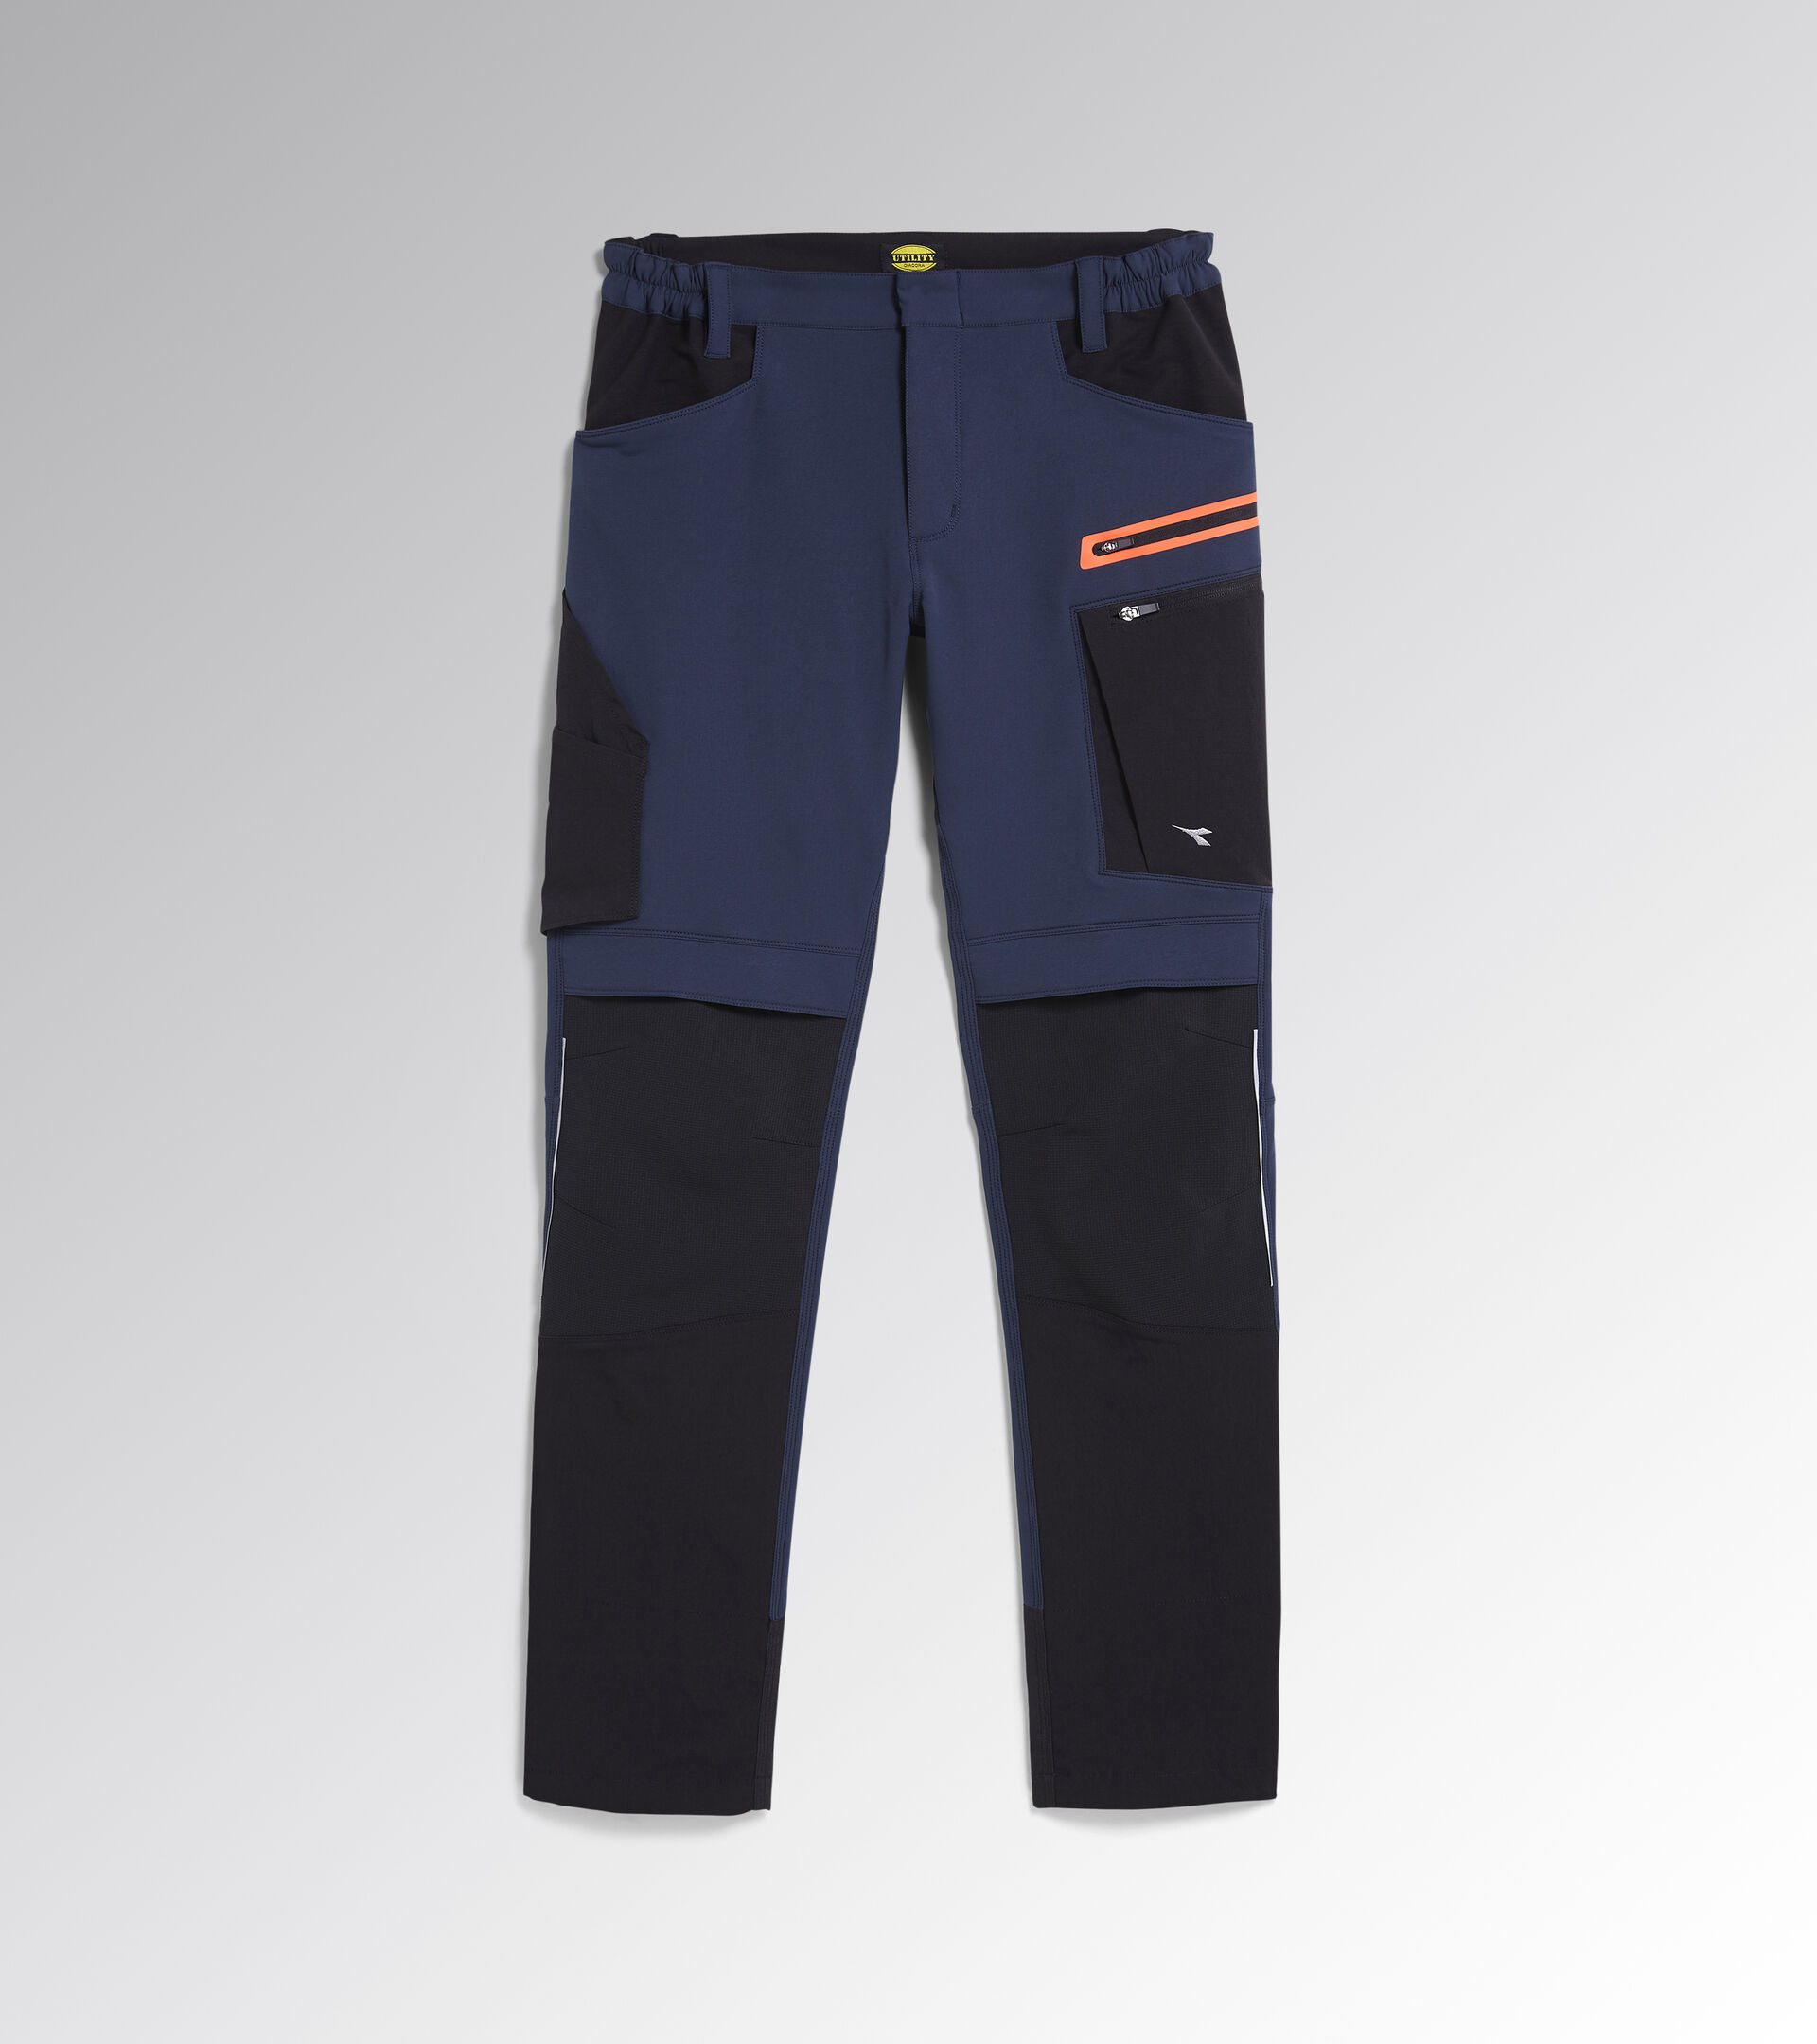 Work trousers PANT HYBRID PERFORMANCE BLACK/BLUE DENIM - Utility